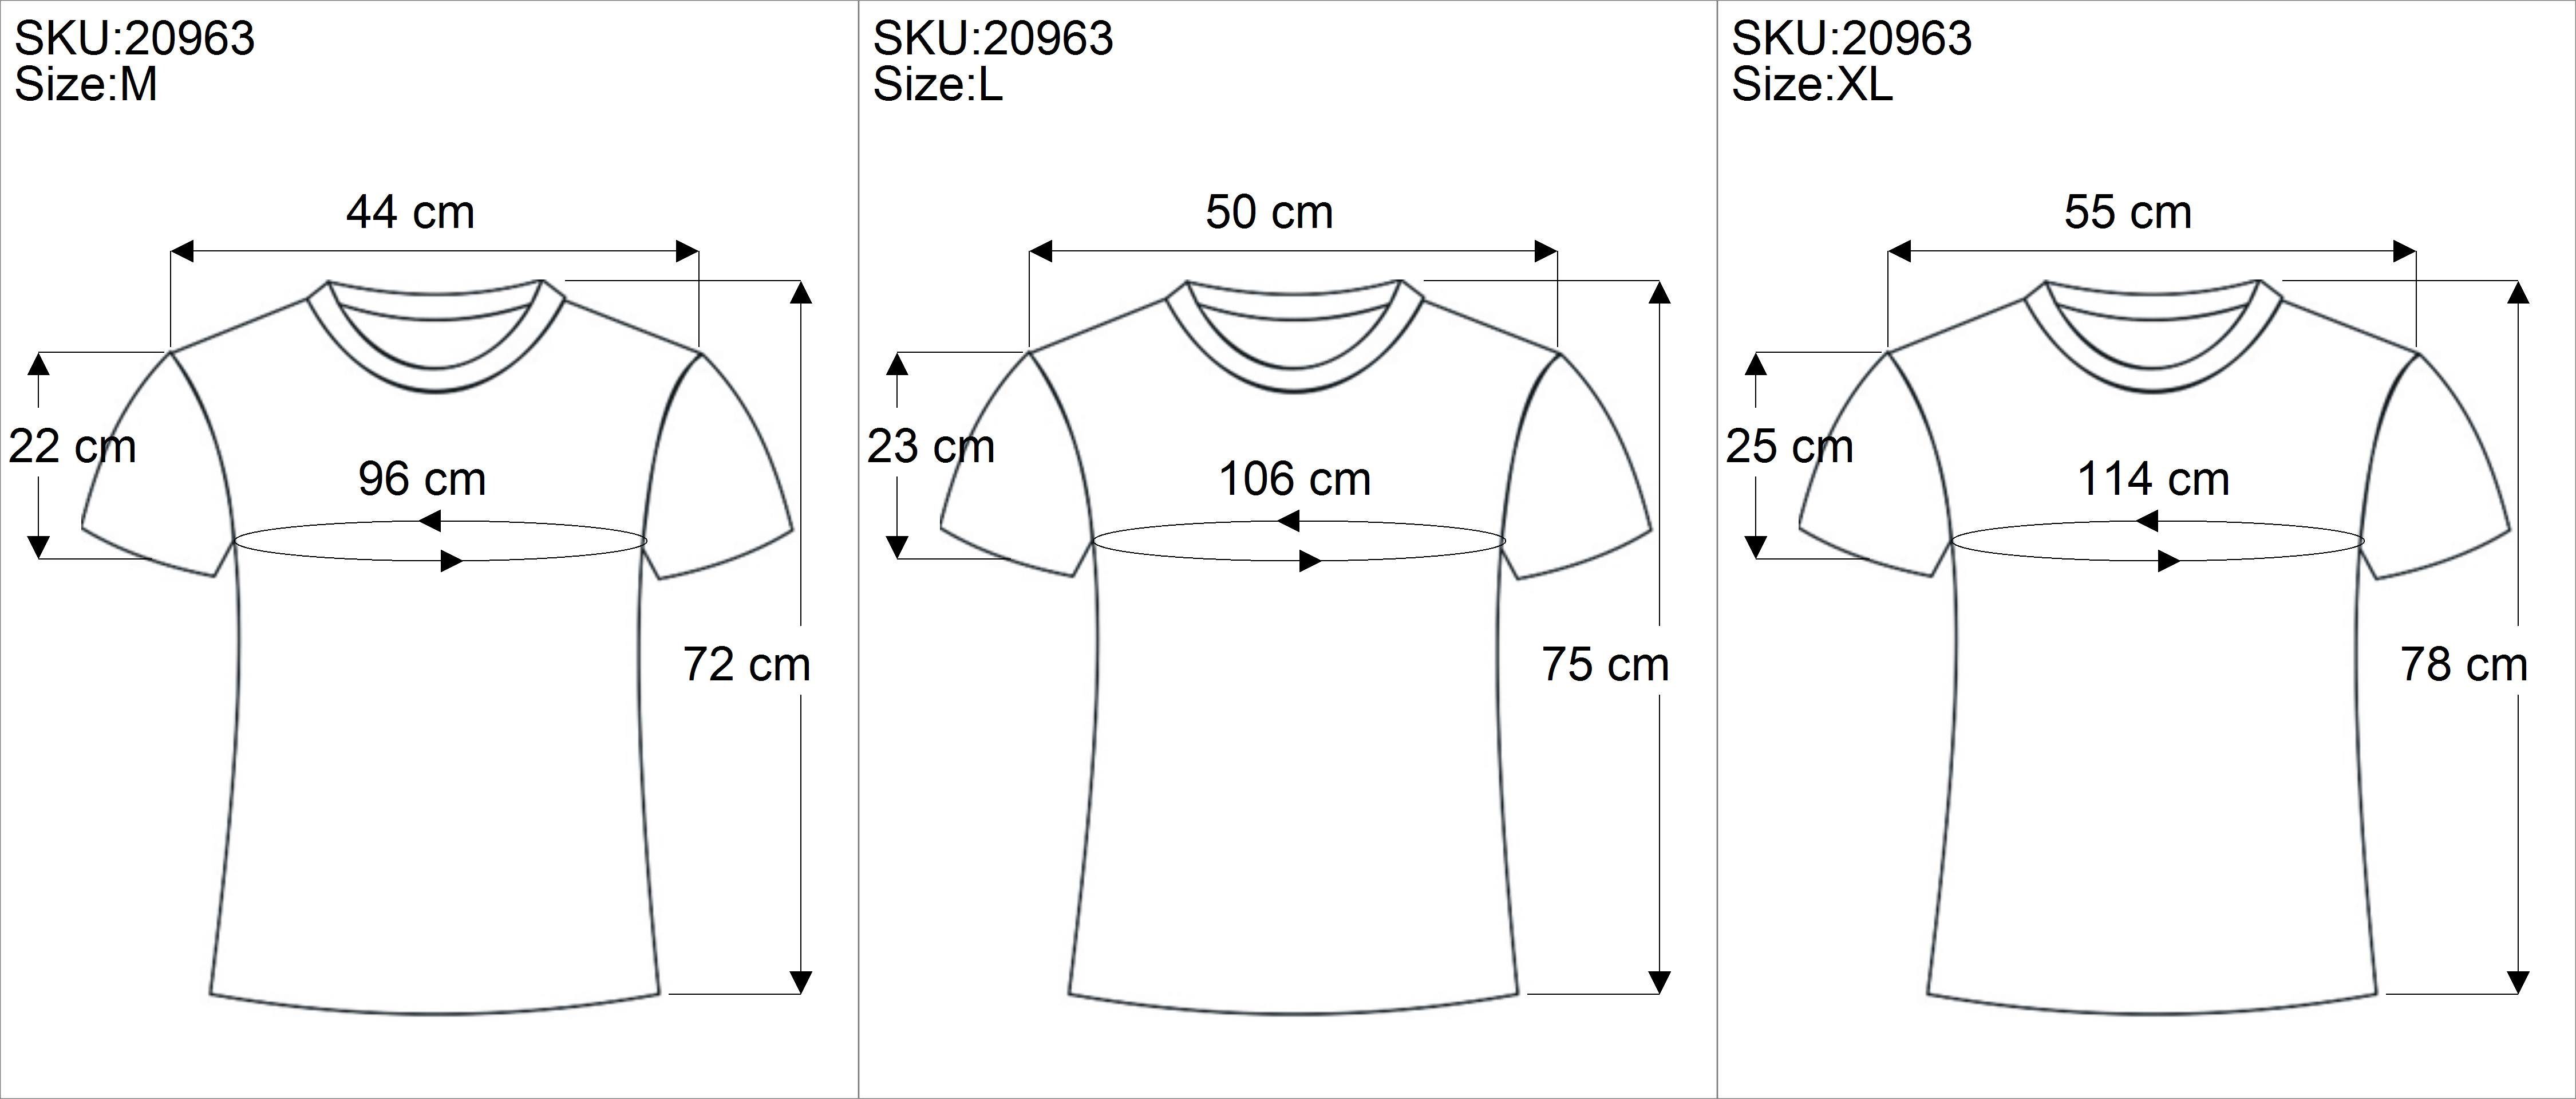 Art Guru-Shop T-Shirt T-Shirt Retro alternative `Wolke` Bekleidung dunkelblau Fun -